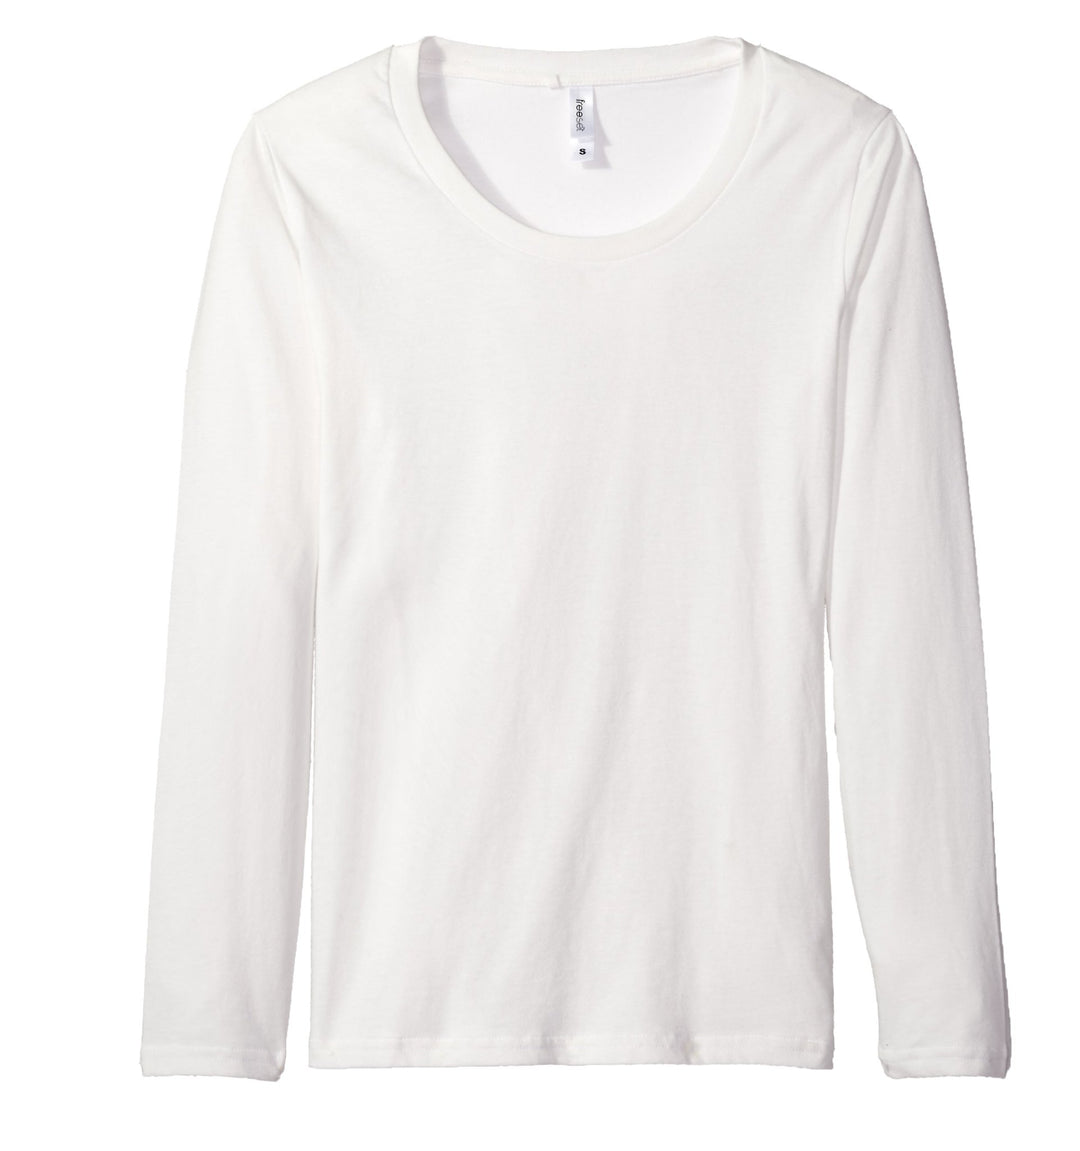 Joyya - T-shirt | Women Long Sleeve | Freeset - T-Shirt - Natural White - FREESET - WOMEN-L-WH-XS